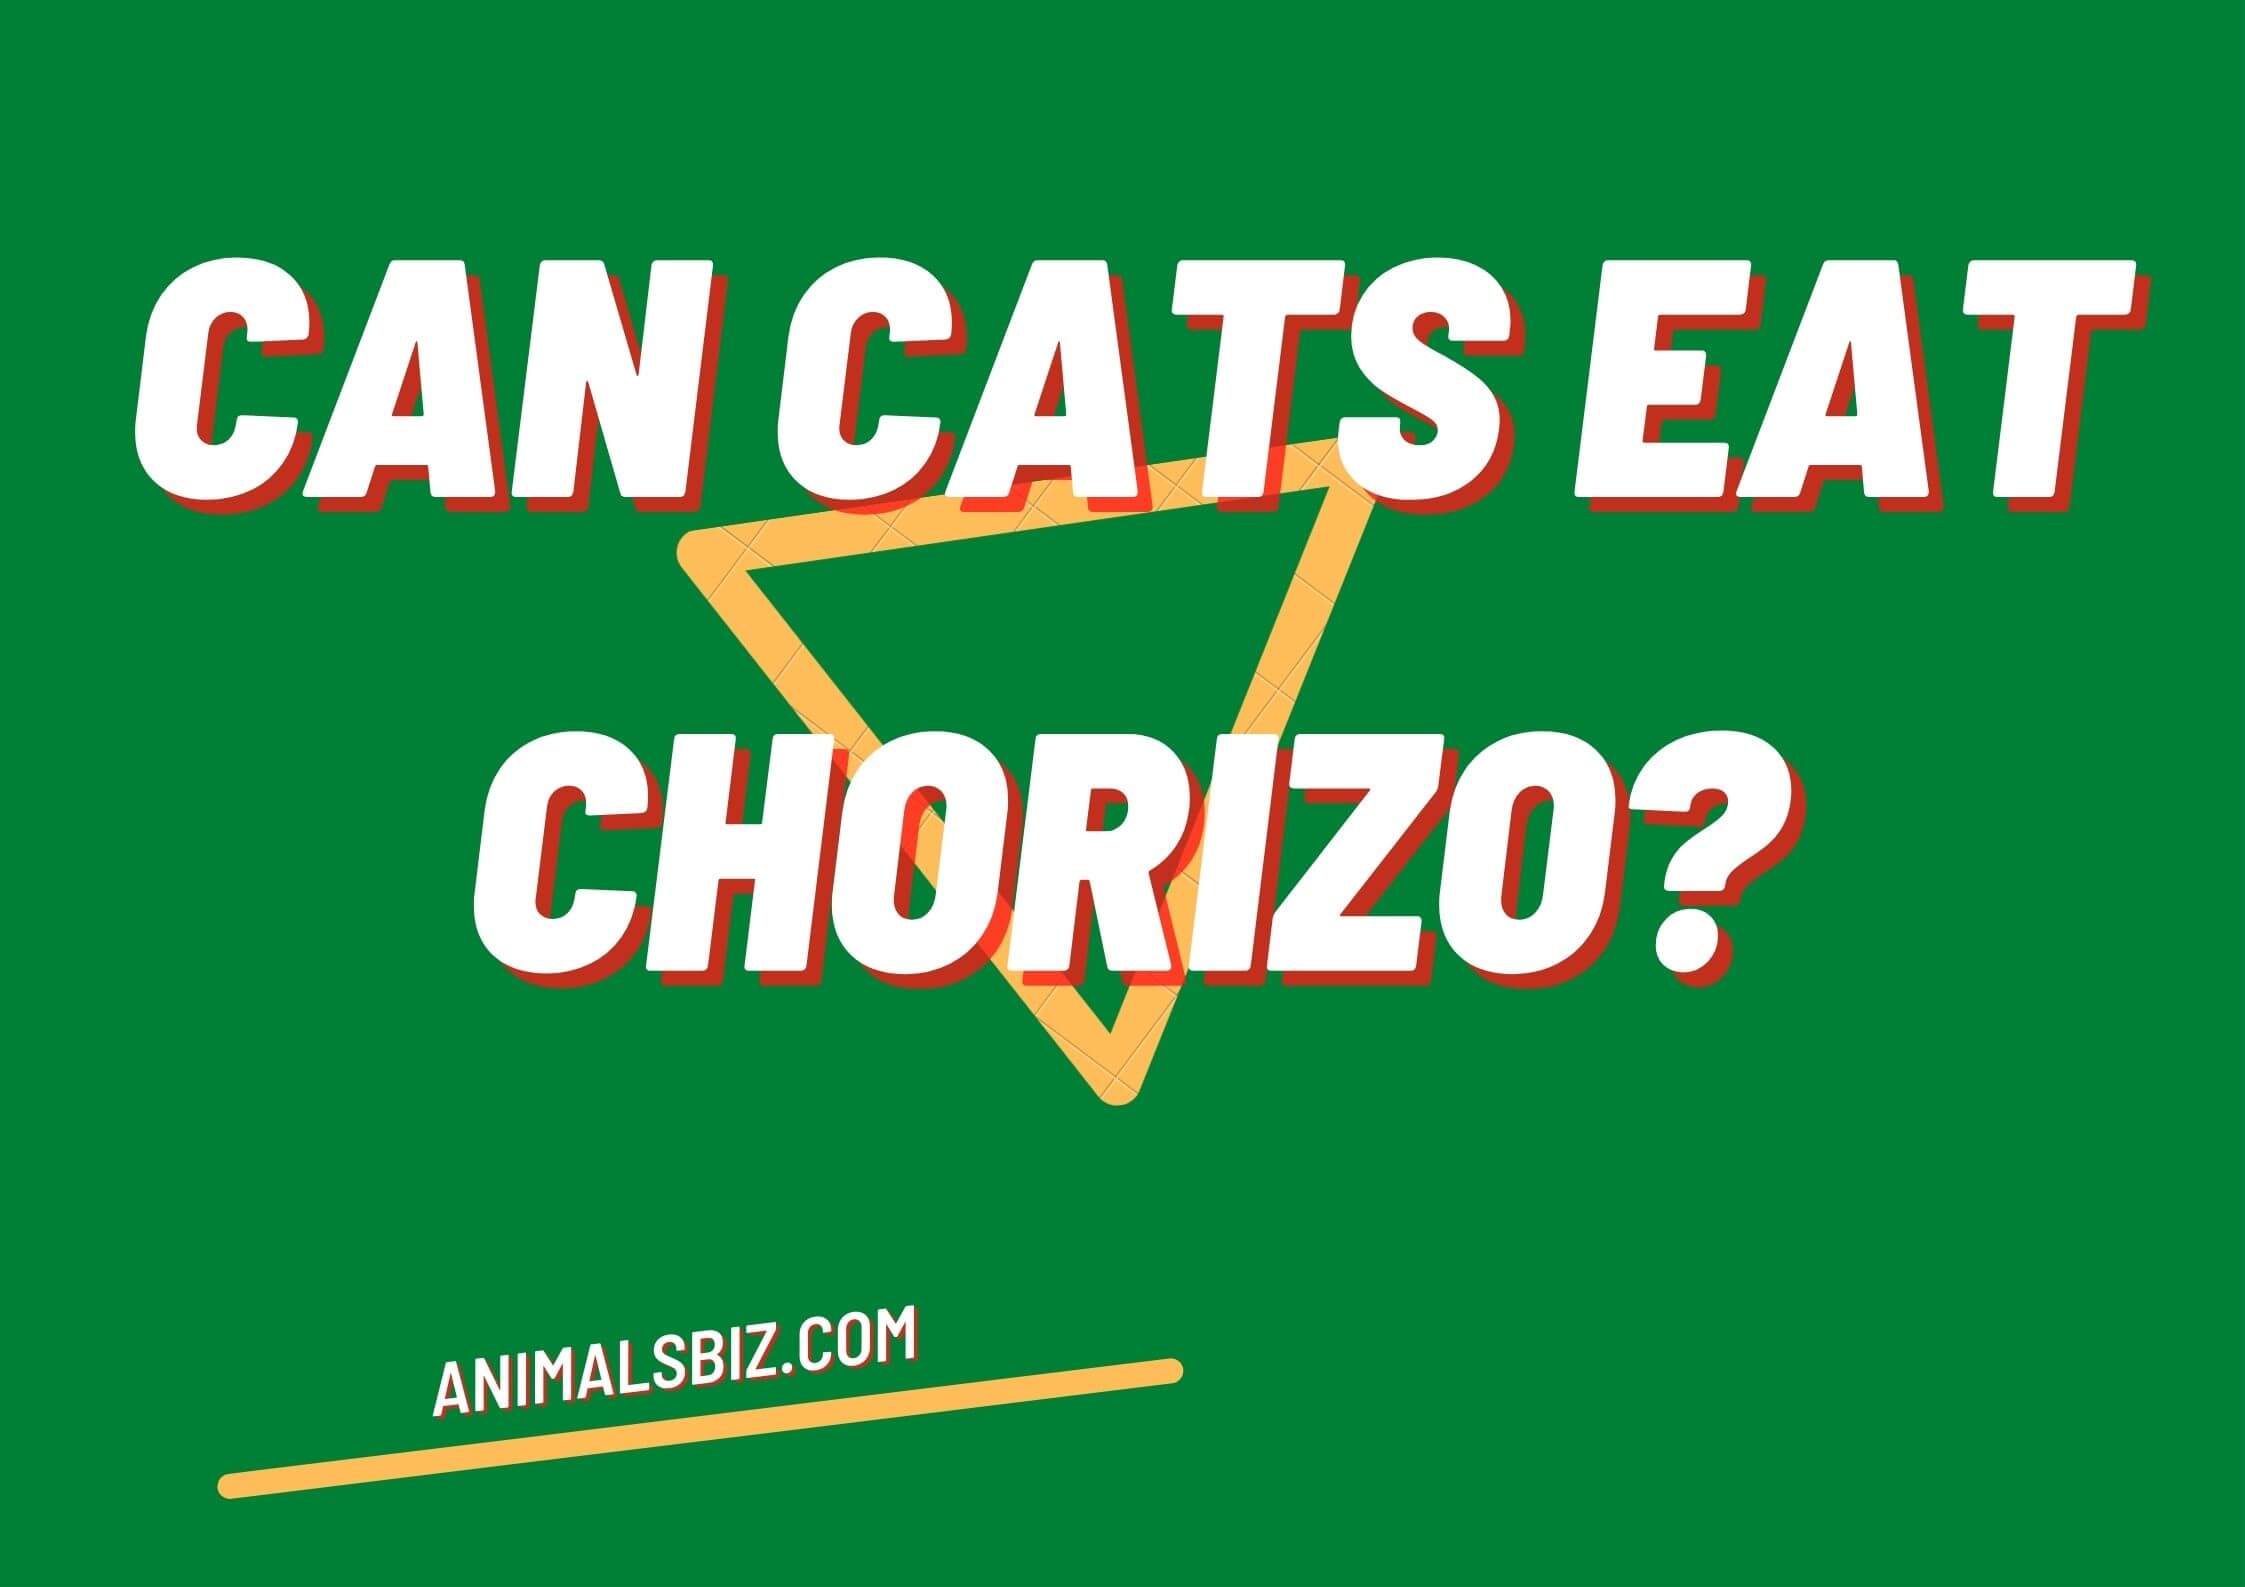 can cats eat chorizo